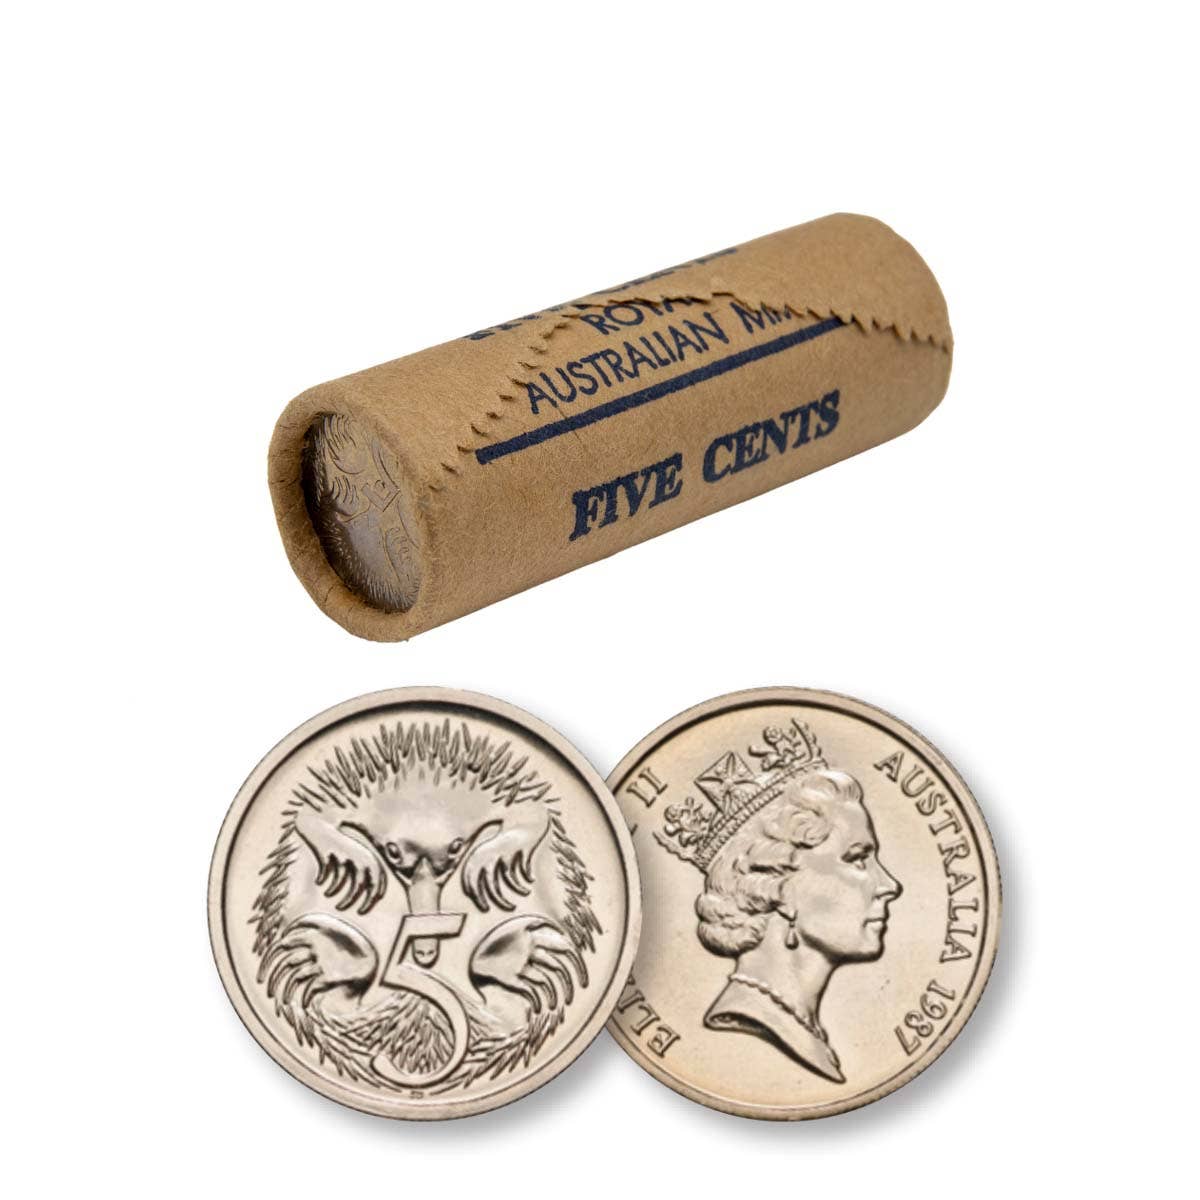 RAM 1987 5c Mint Roll (40 Uncirculated coins)